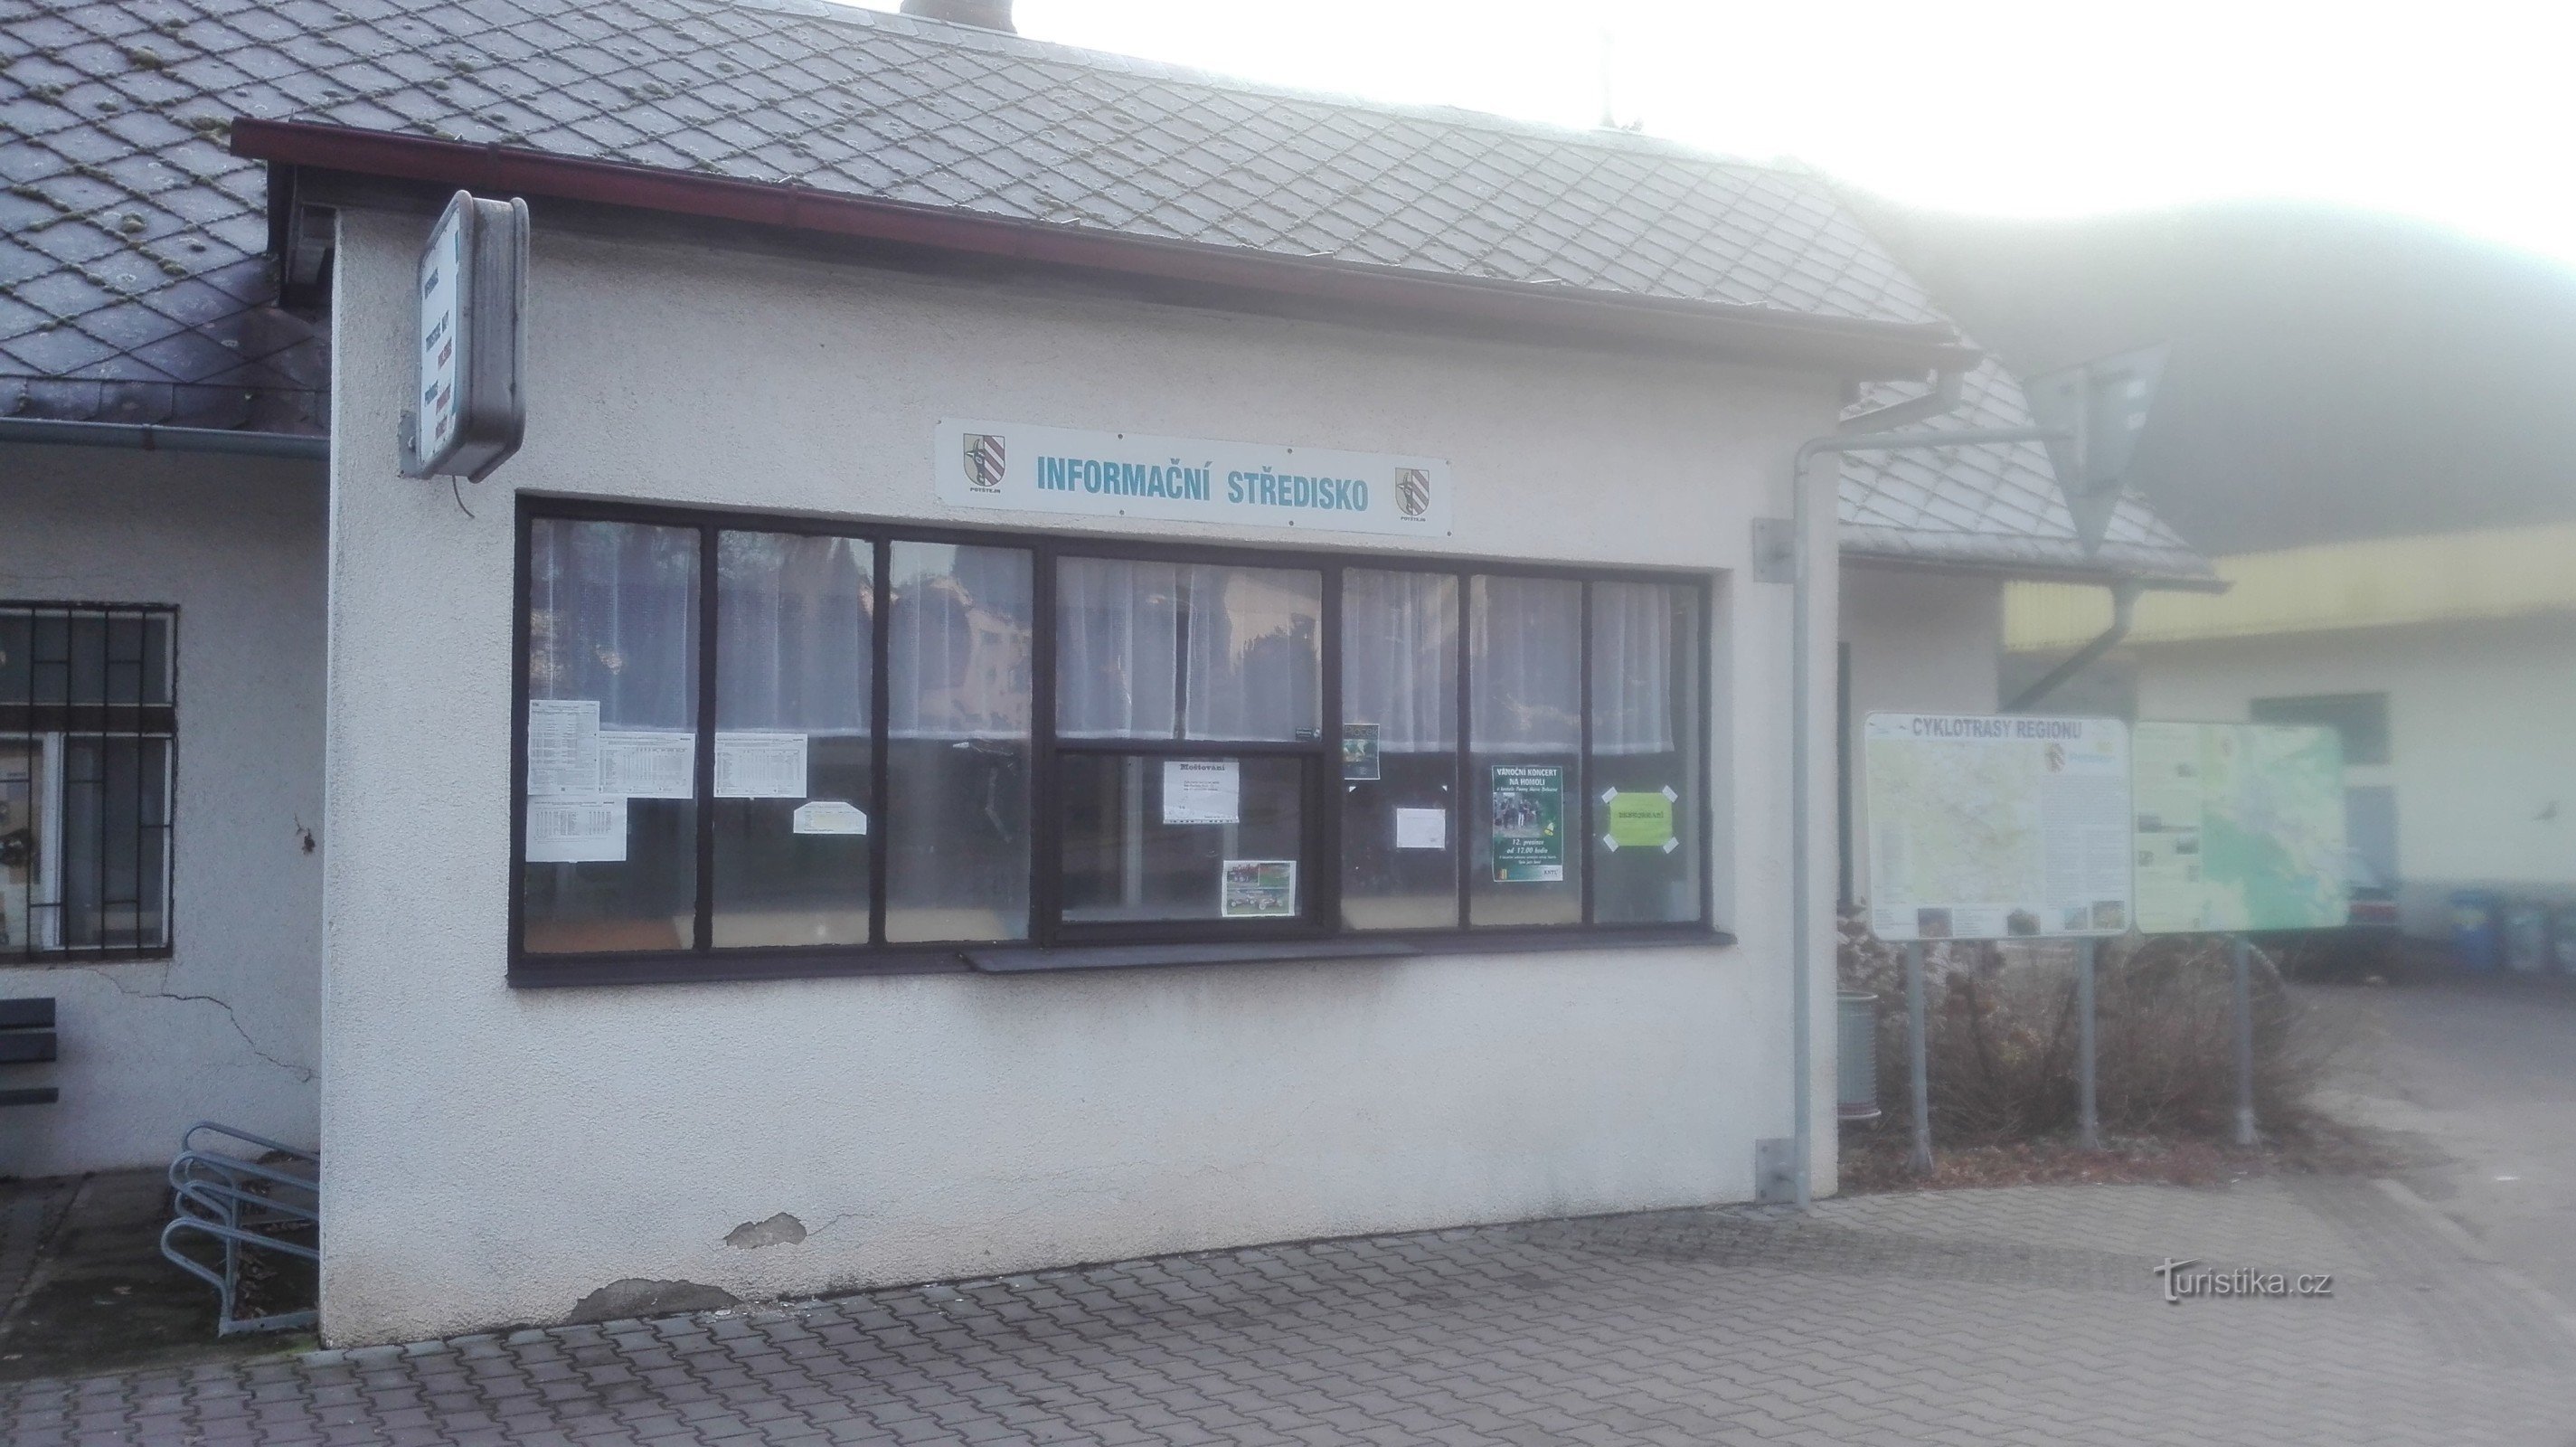 Potštejn - informationscenter